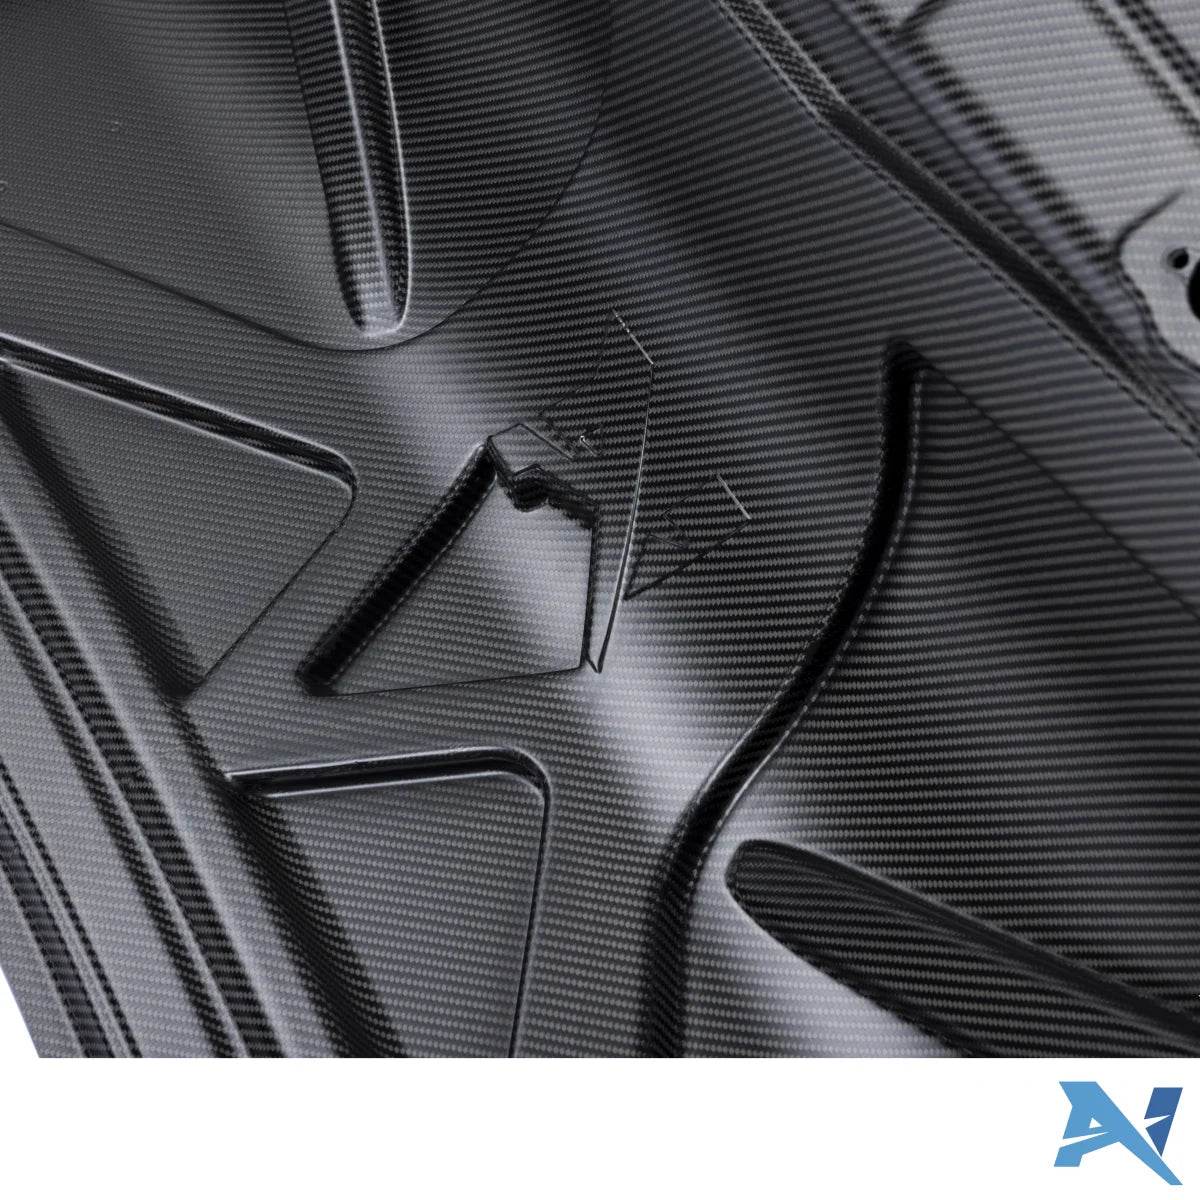 BMW G87 M2 Carbon Fiber Tailgate